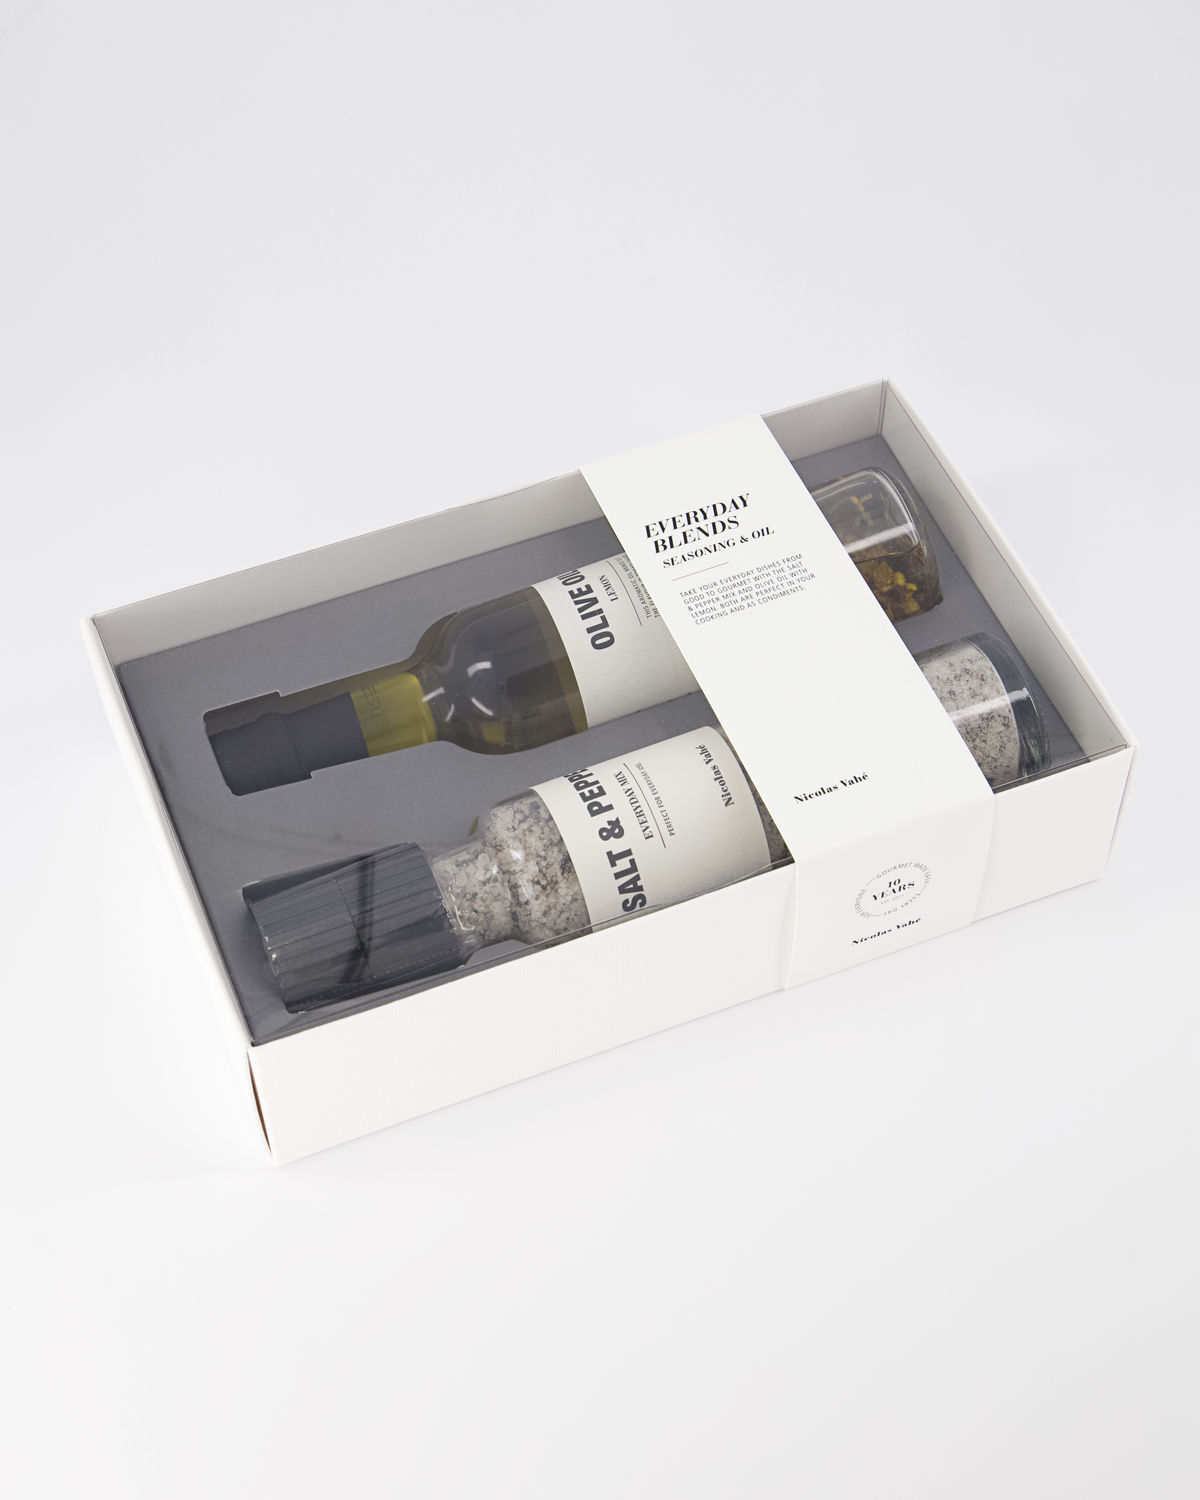 Gift box, Nicolas Vahé Everyday blends - Seasoning & oil, 310 g., 25 cl.